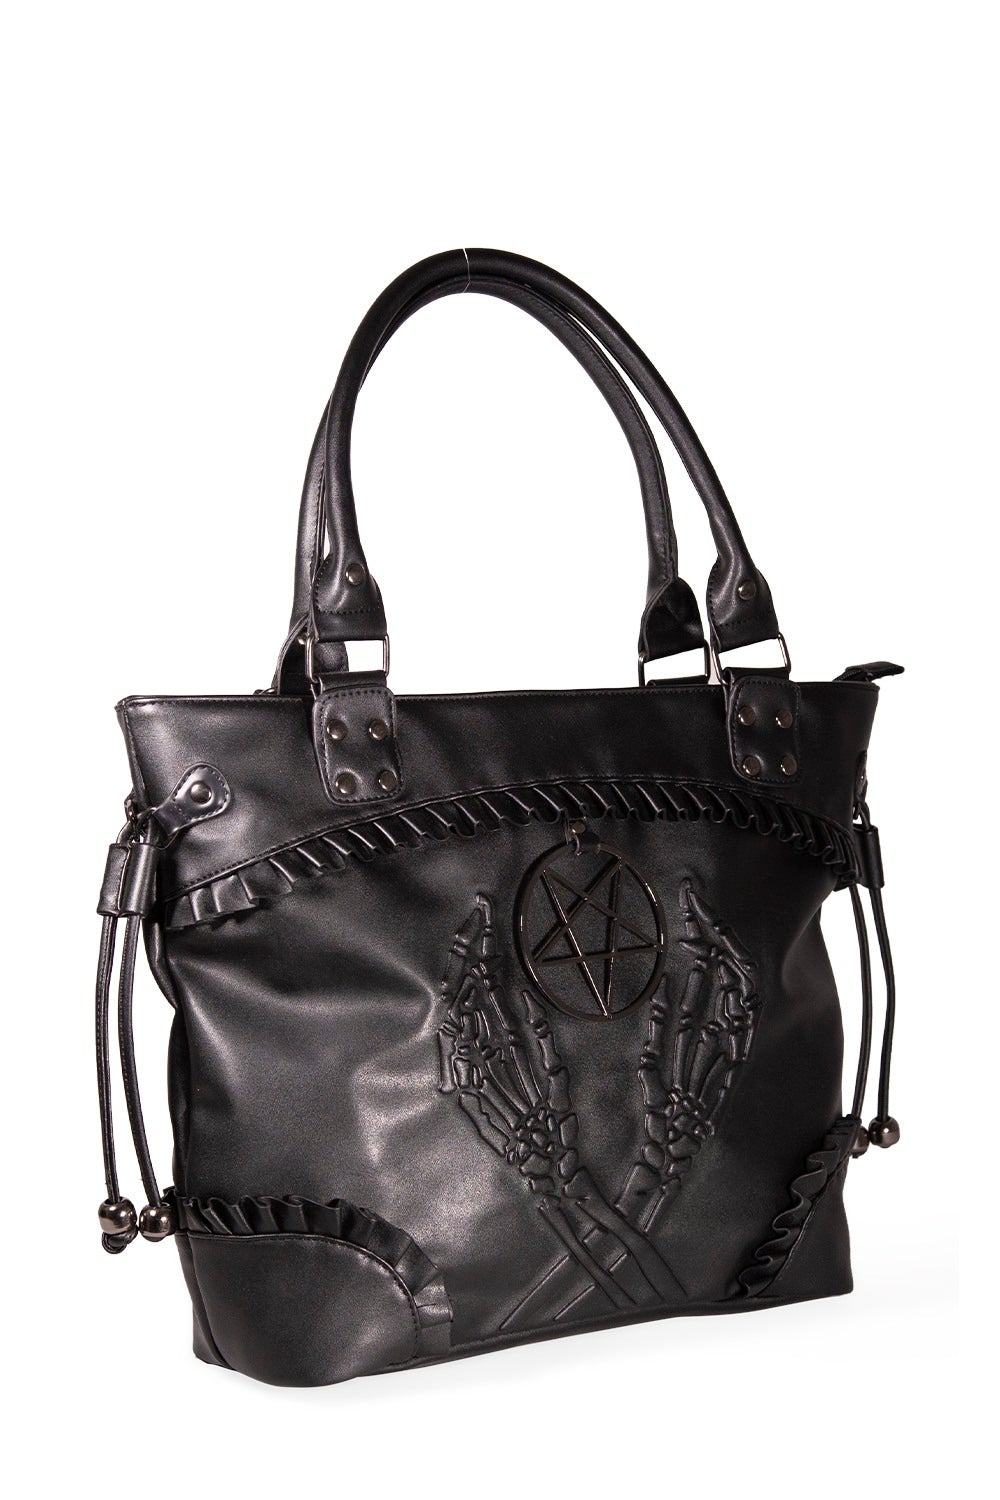 Black tote styled hand bag with black frills, embossed skeleton hands and pentagram. 